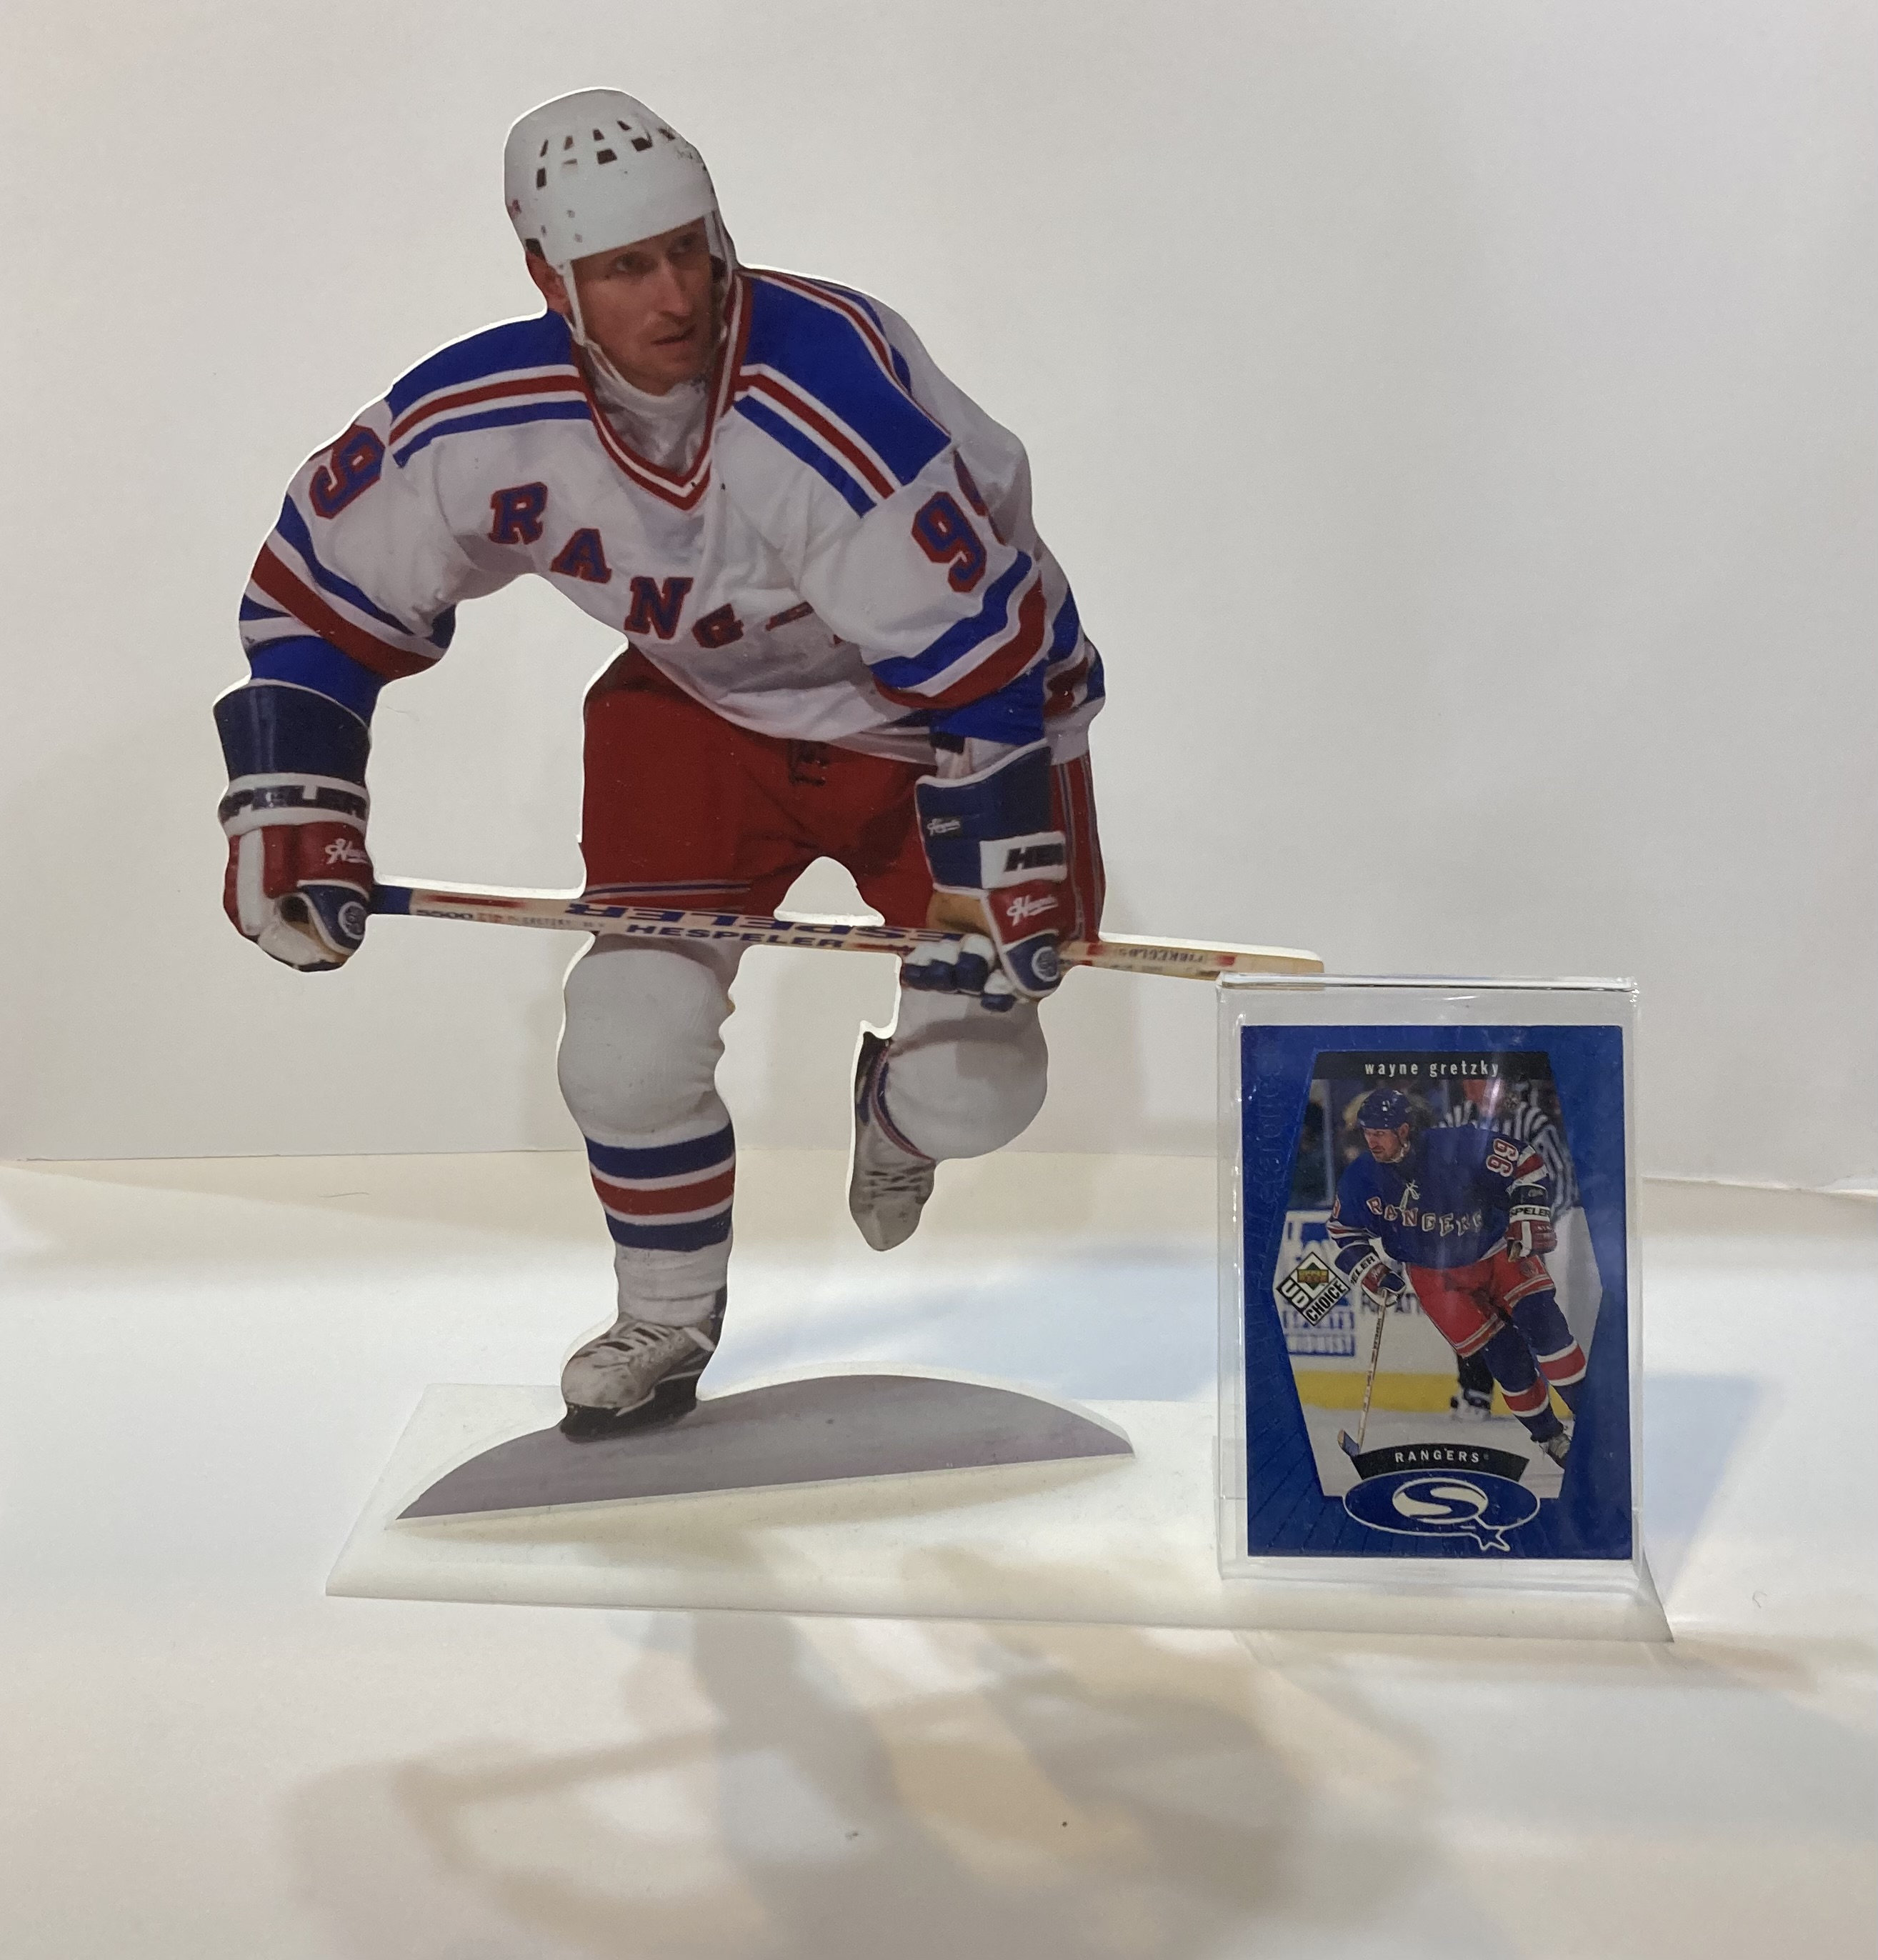 Wayne Gretzky scores goal number 802, breaks NHL record - Sports Illustrated